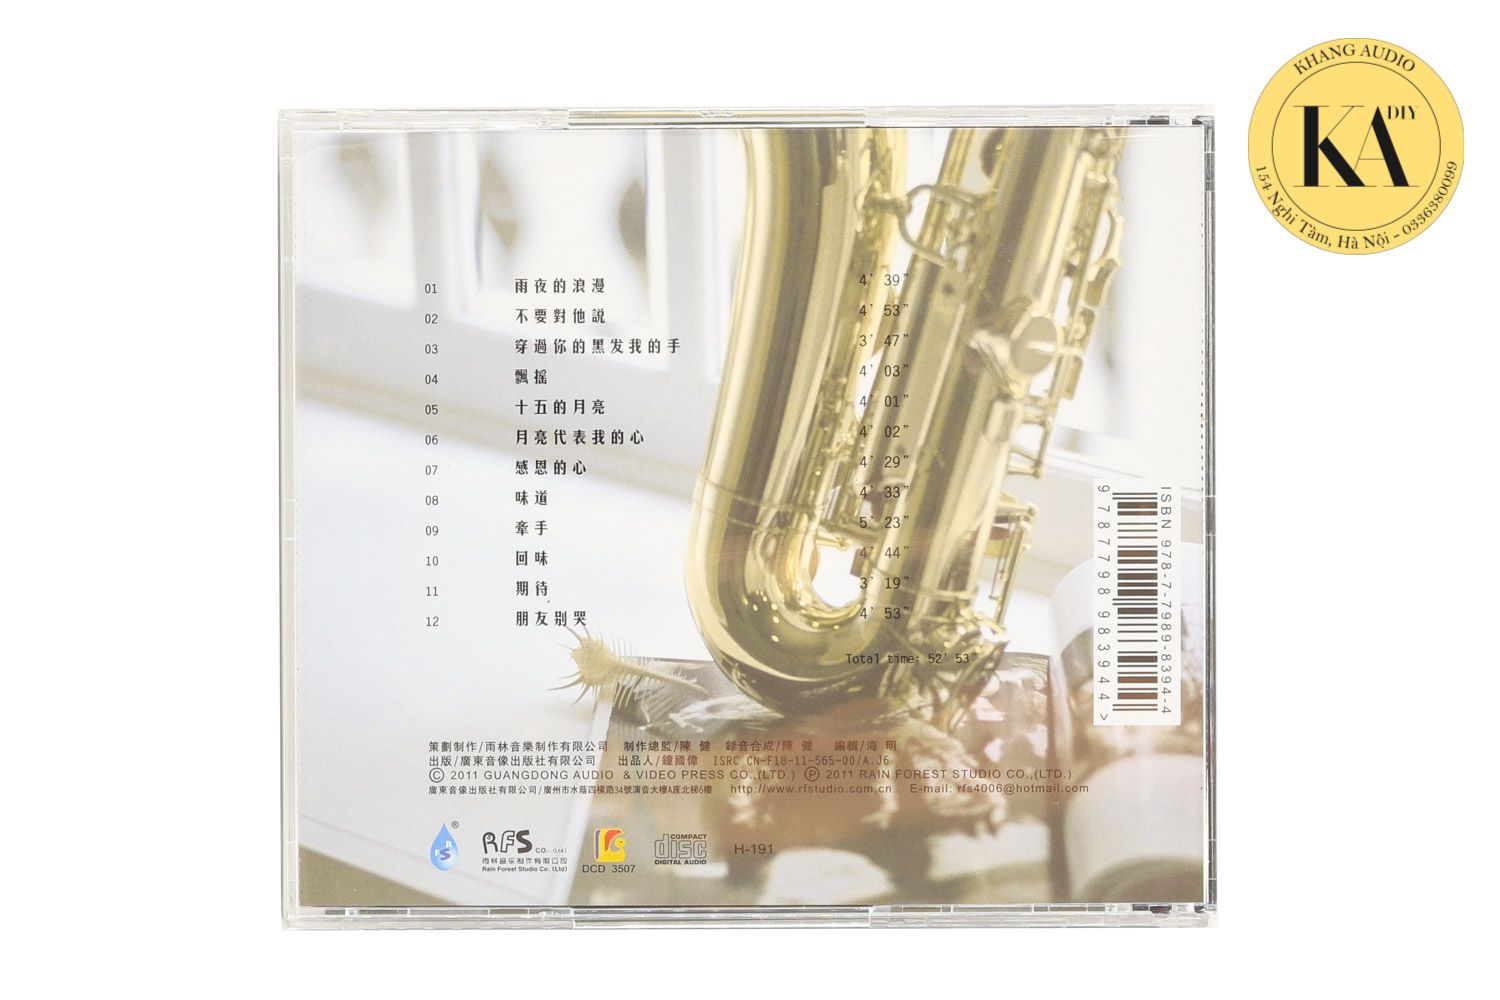 Saxophone - A Ramn Night Romance Khang Audio 0336380099